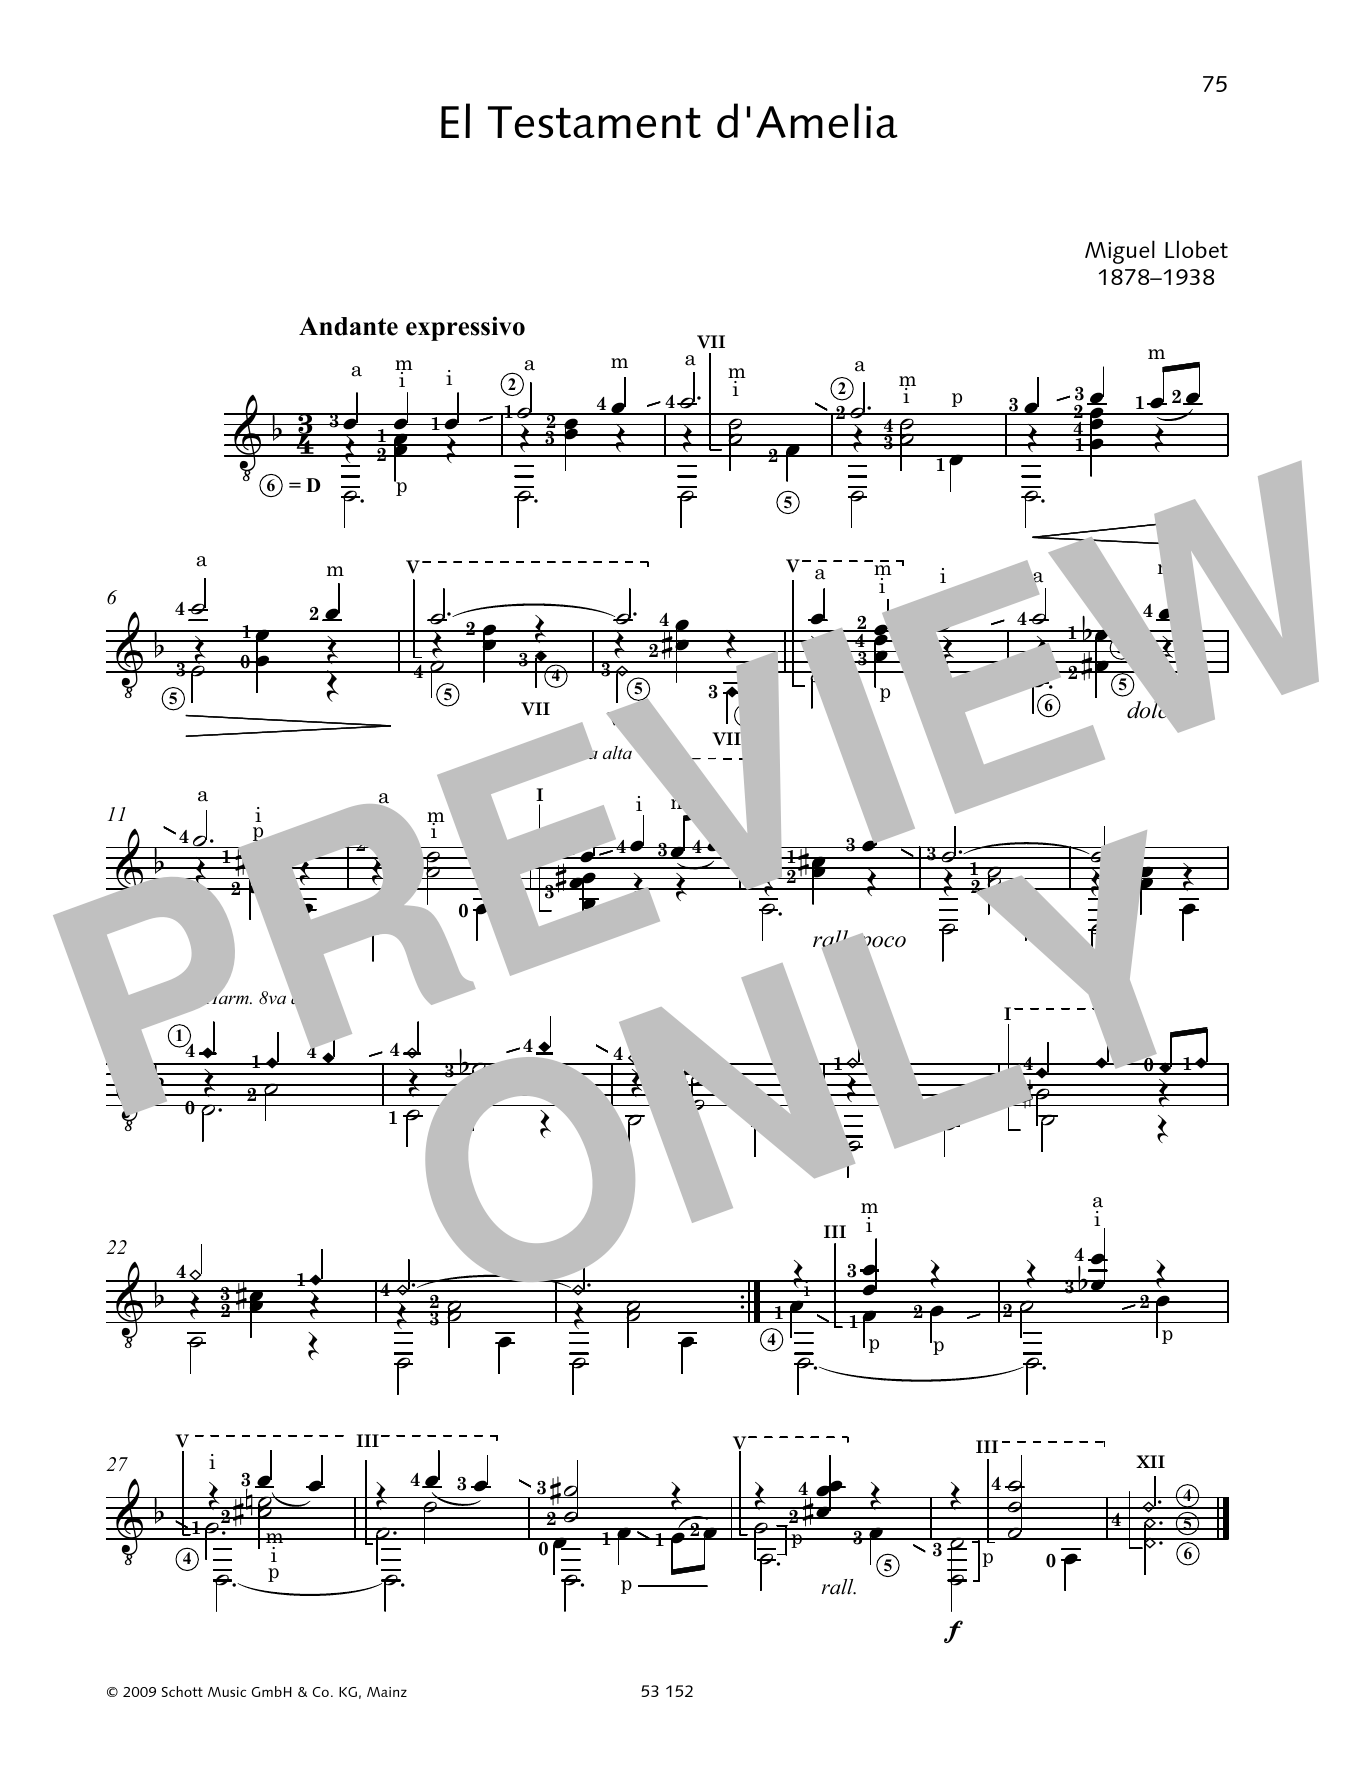 Miguel Llobet El Testament d'Amelia Sheet Music Notes & Chords for Solo Guitar - Download or Print PDF